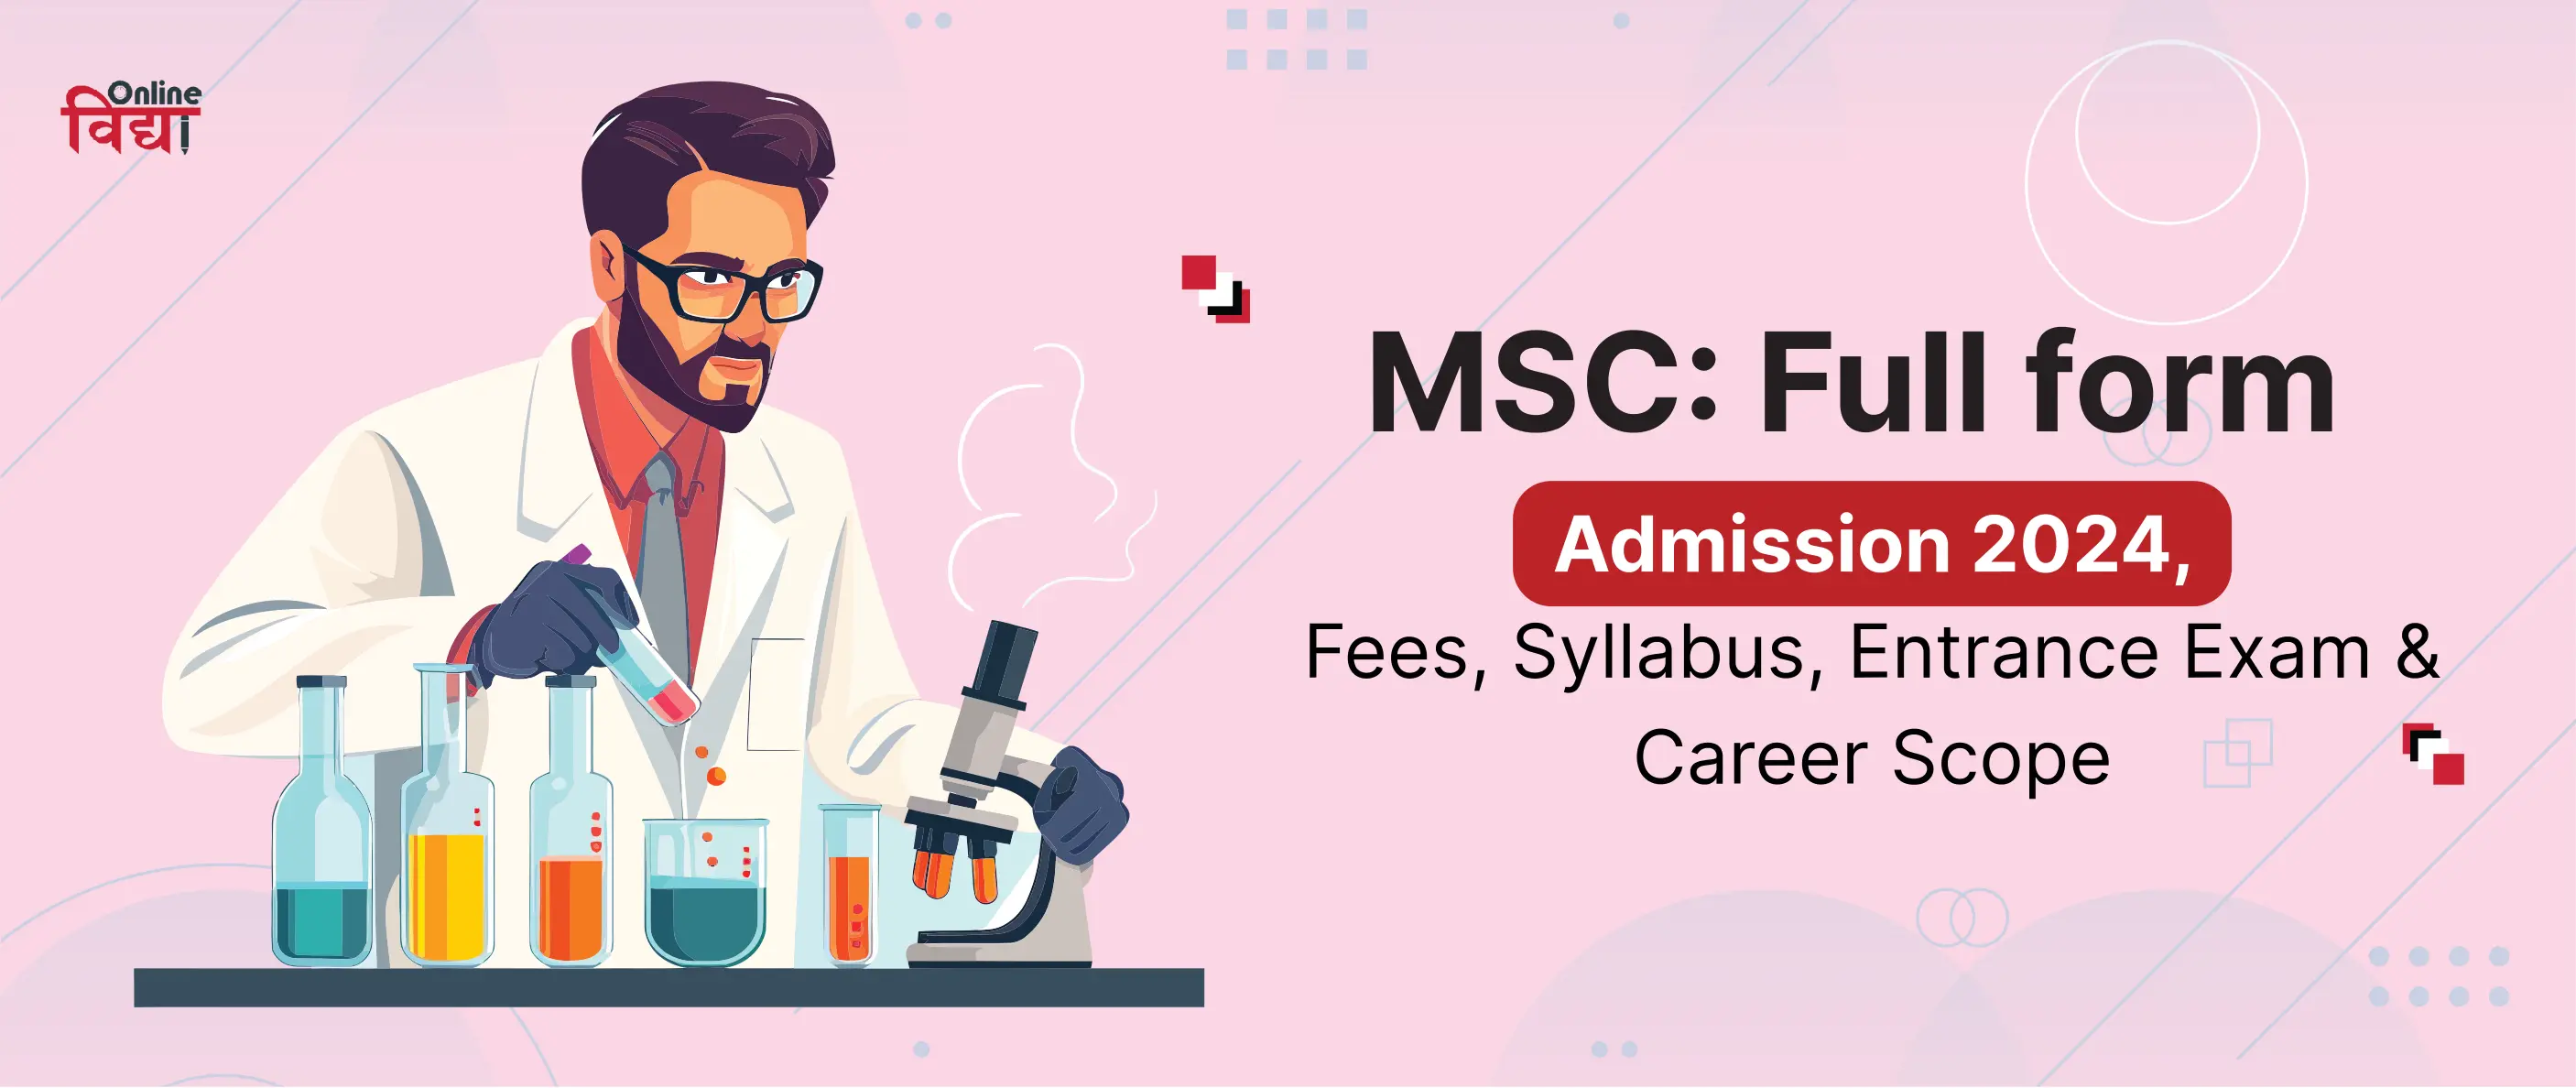 MSC: Full form, Admission 2024, Fees, Syllabus, Entrance Exam & Career Scope